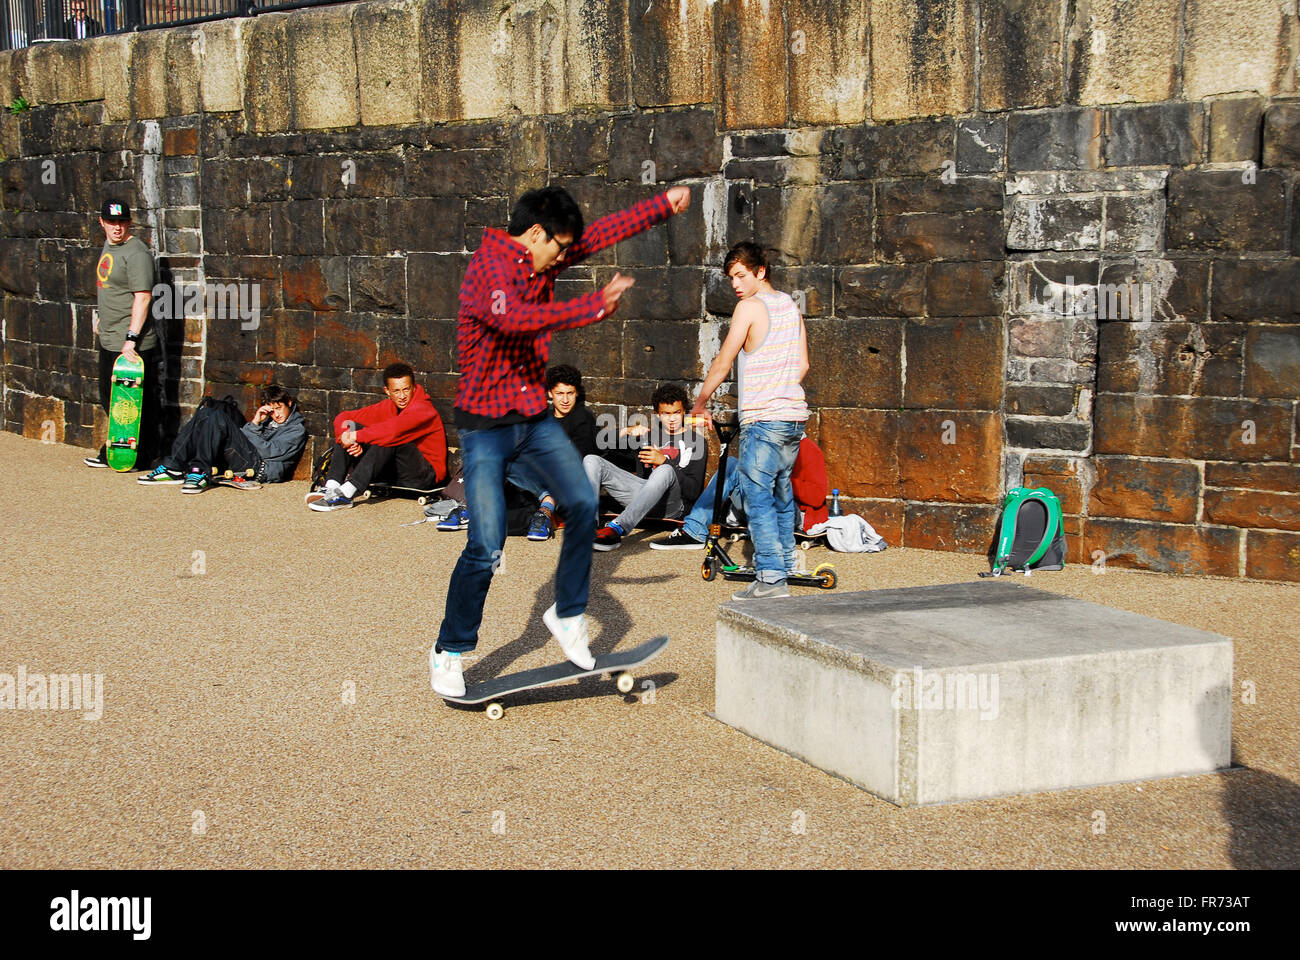 Chinese boy skateboarding Stock Photo